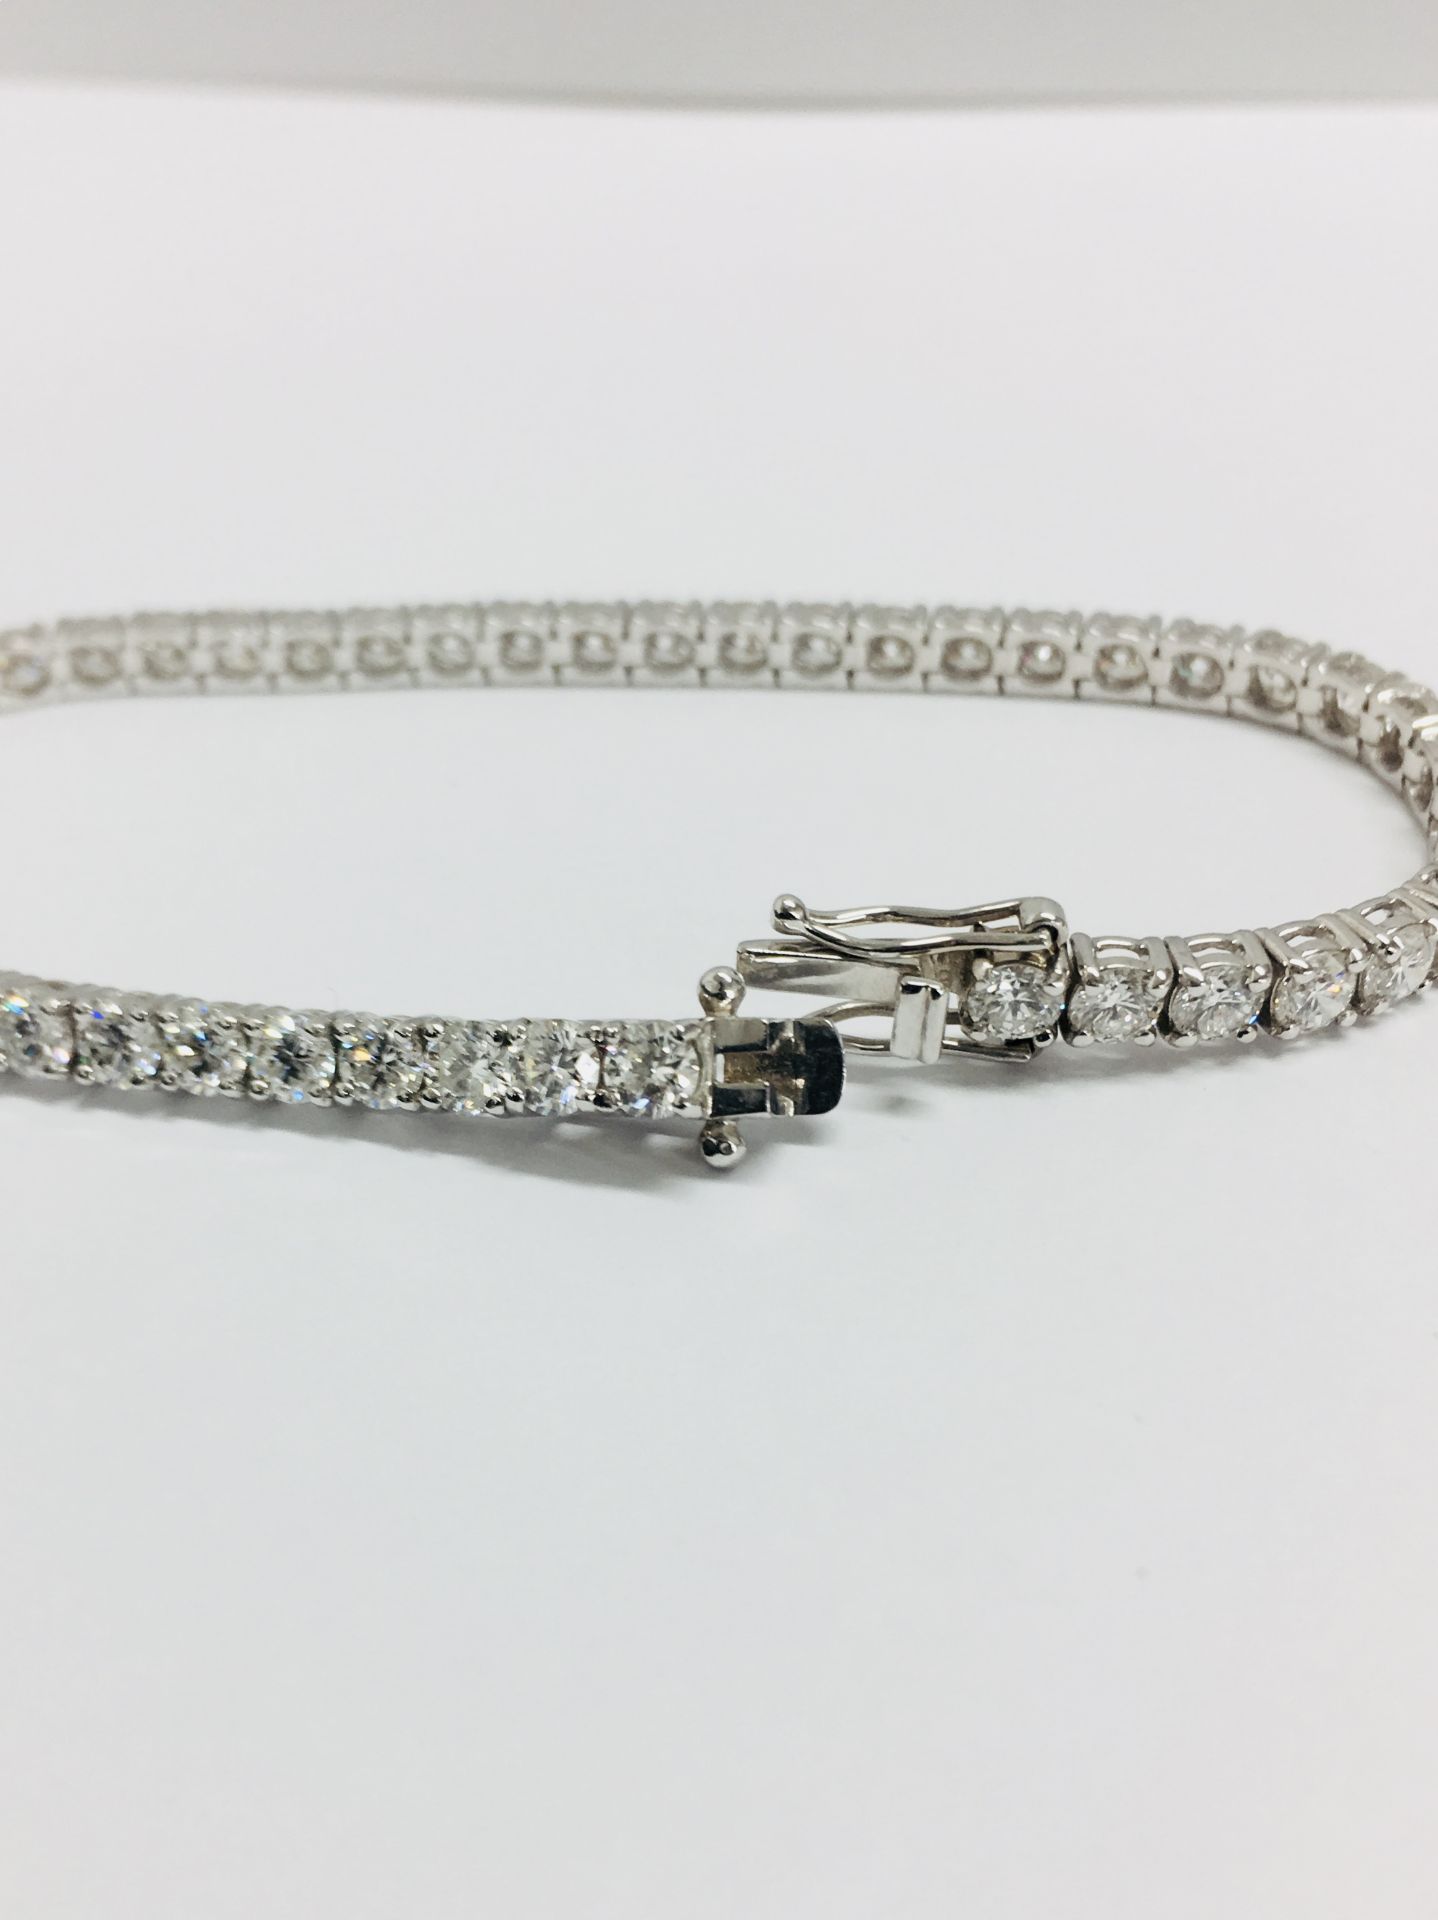 8.00ct Diamond tennis bracelet set with brilliant cut diamonds of H colour, si2 clarity. All set